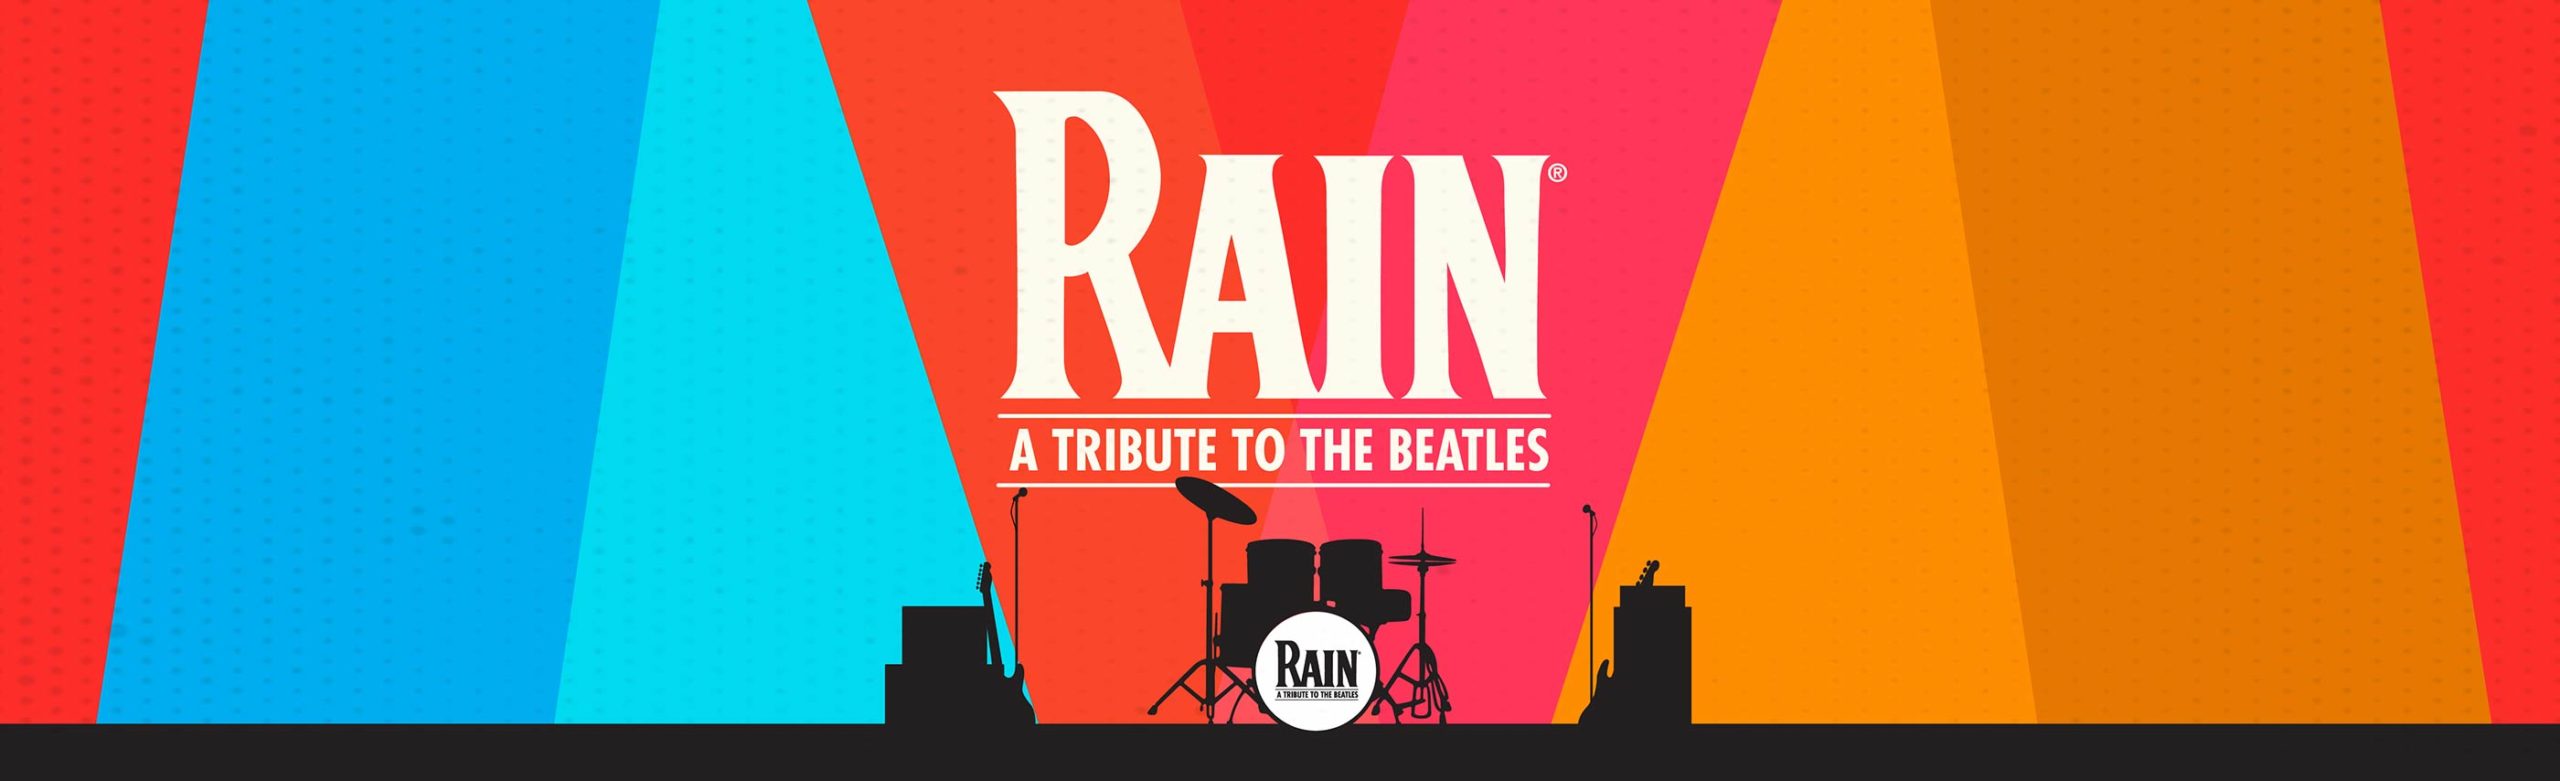 RAIN – A Tribute To The Beatles Announces Return to KettleHouse Amphitheater Image